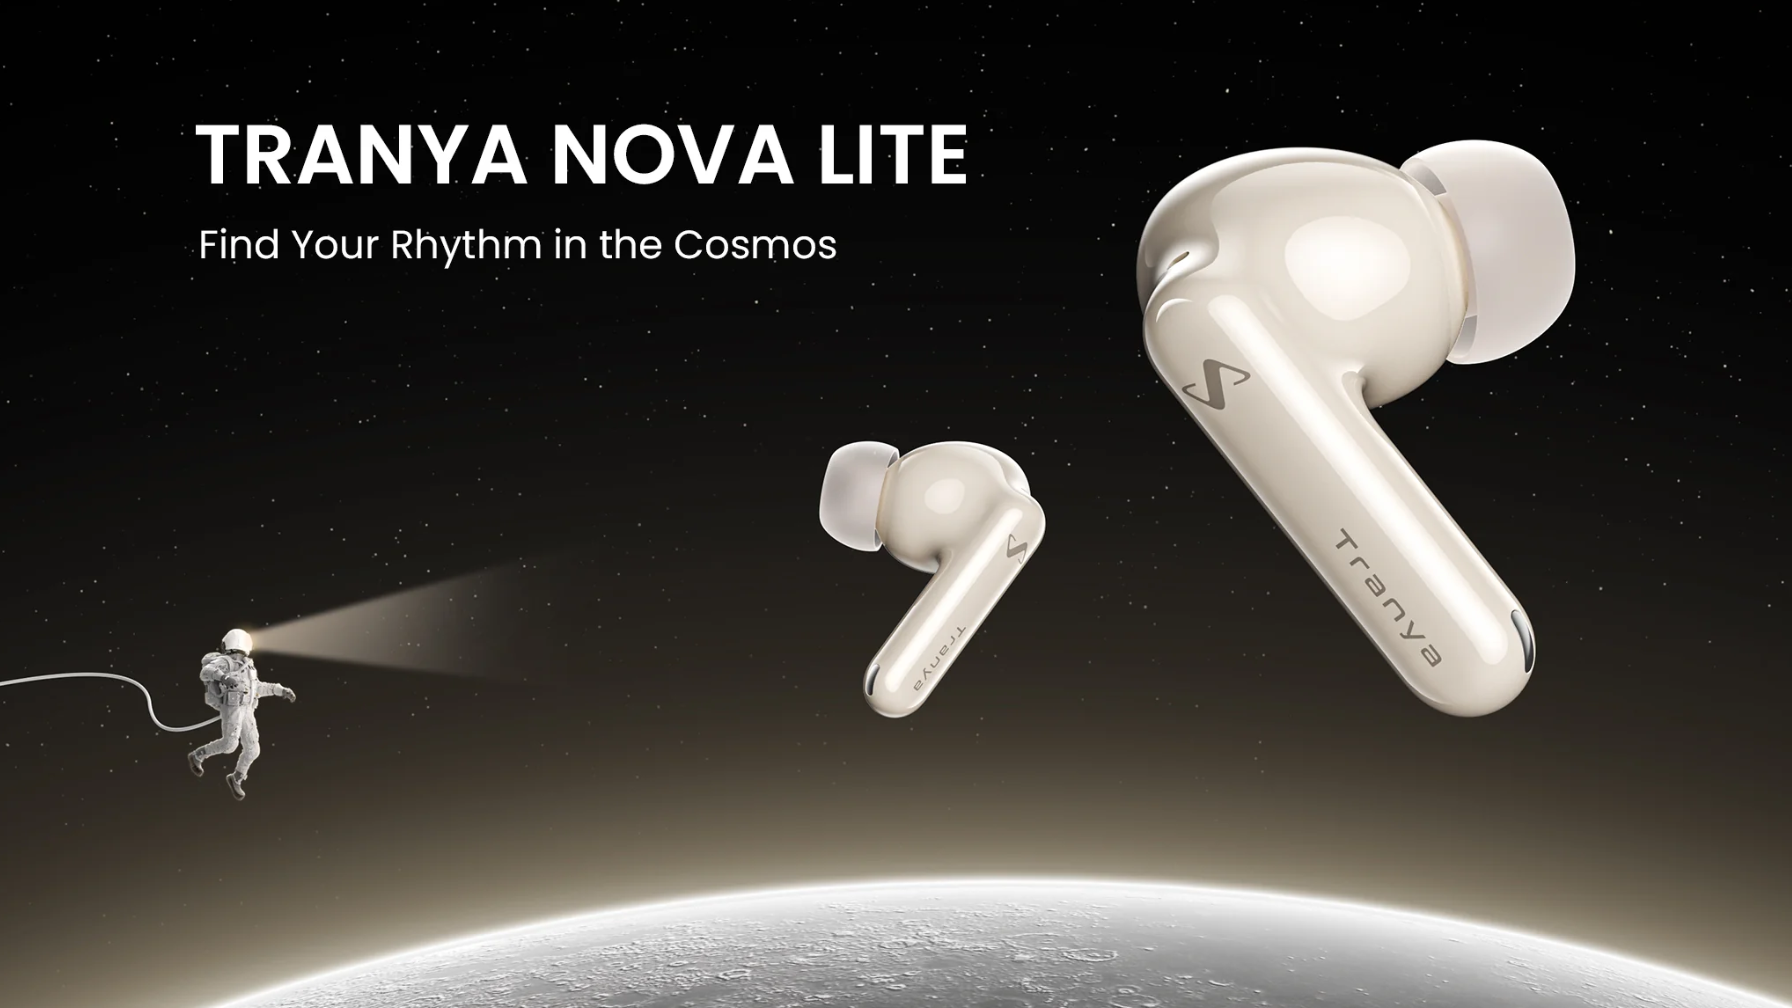 Nova Lite Tranya Earbuds